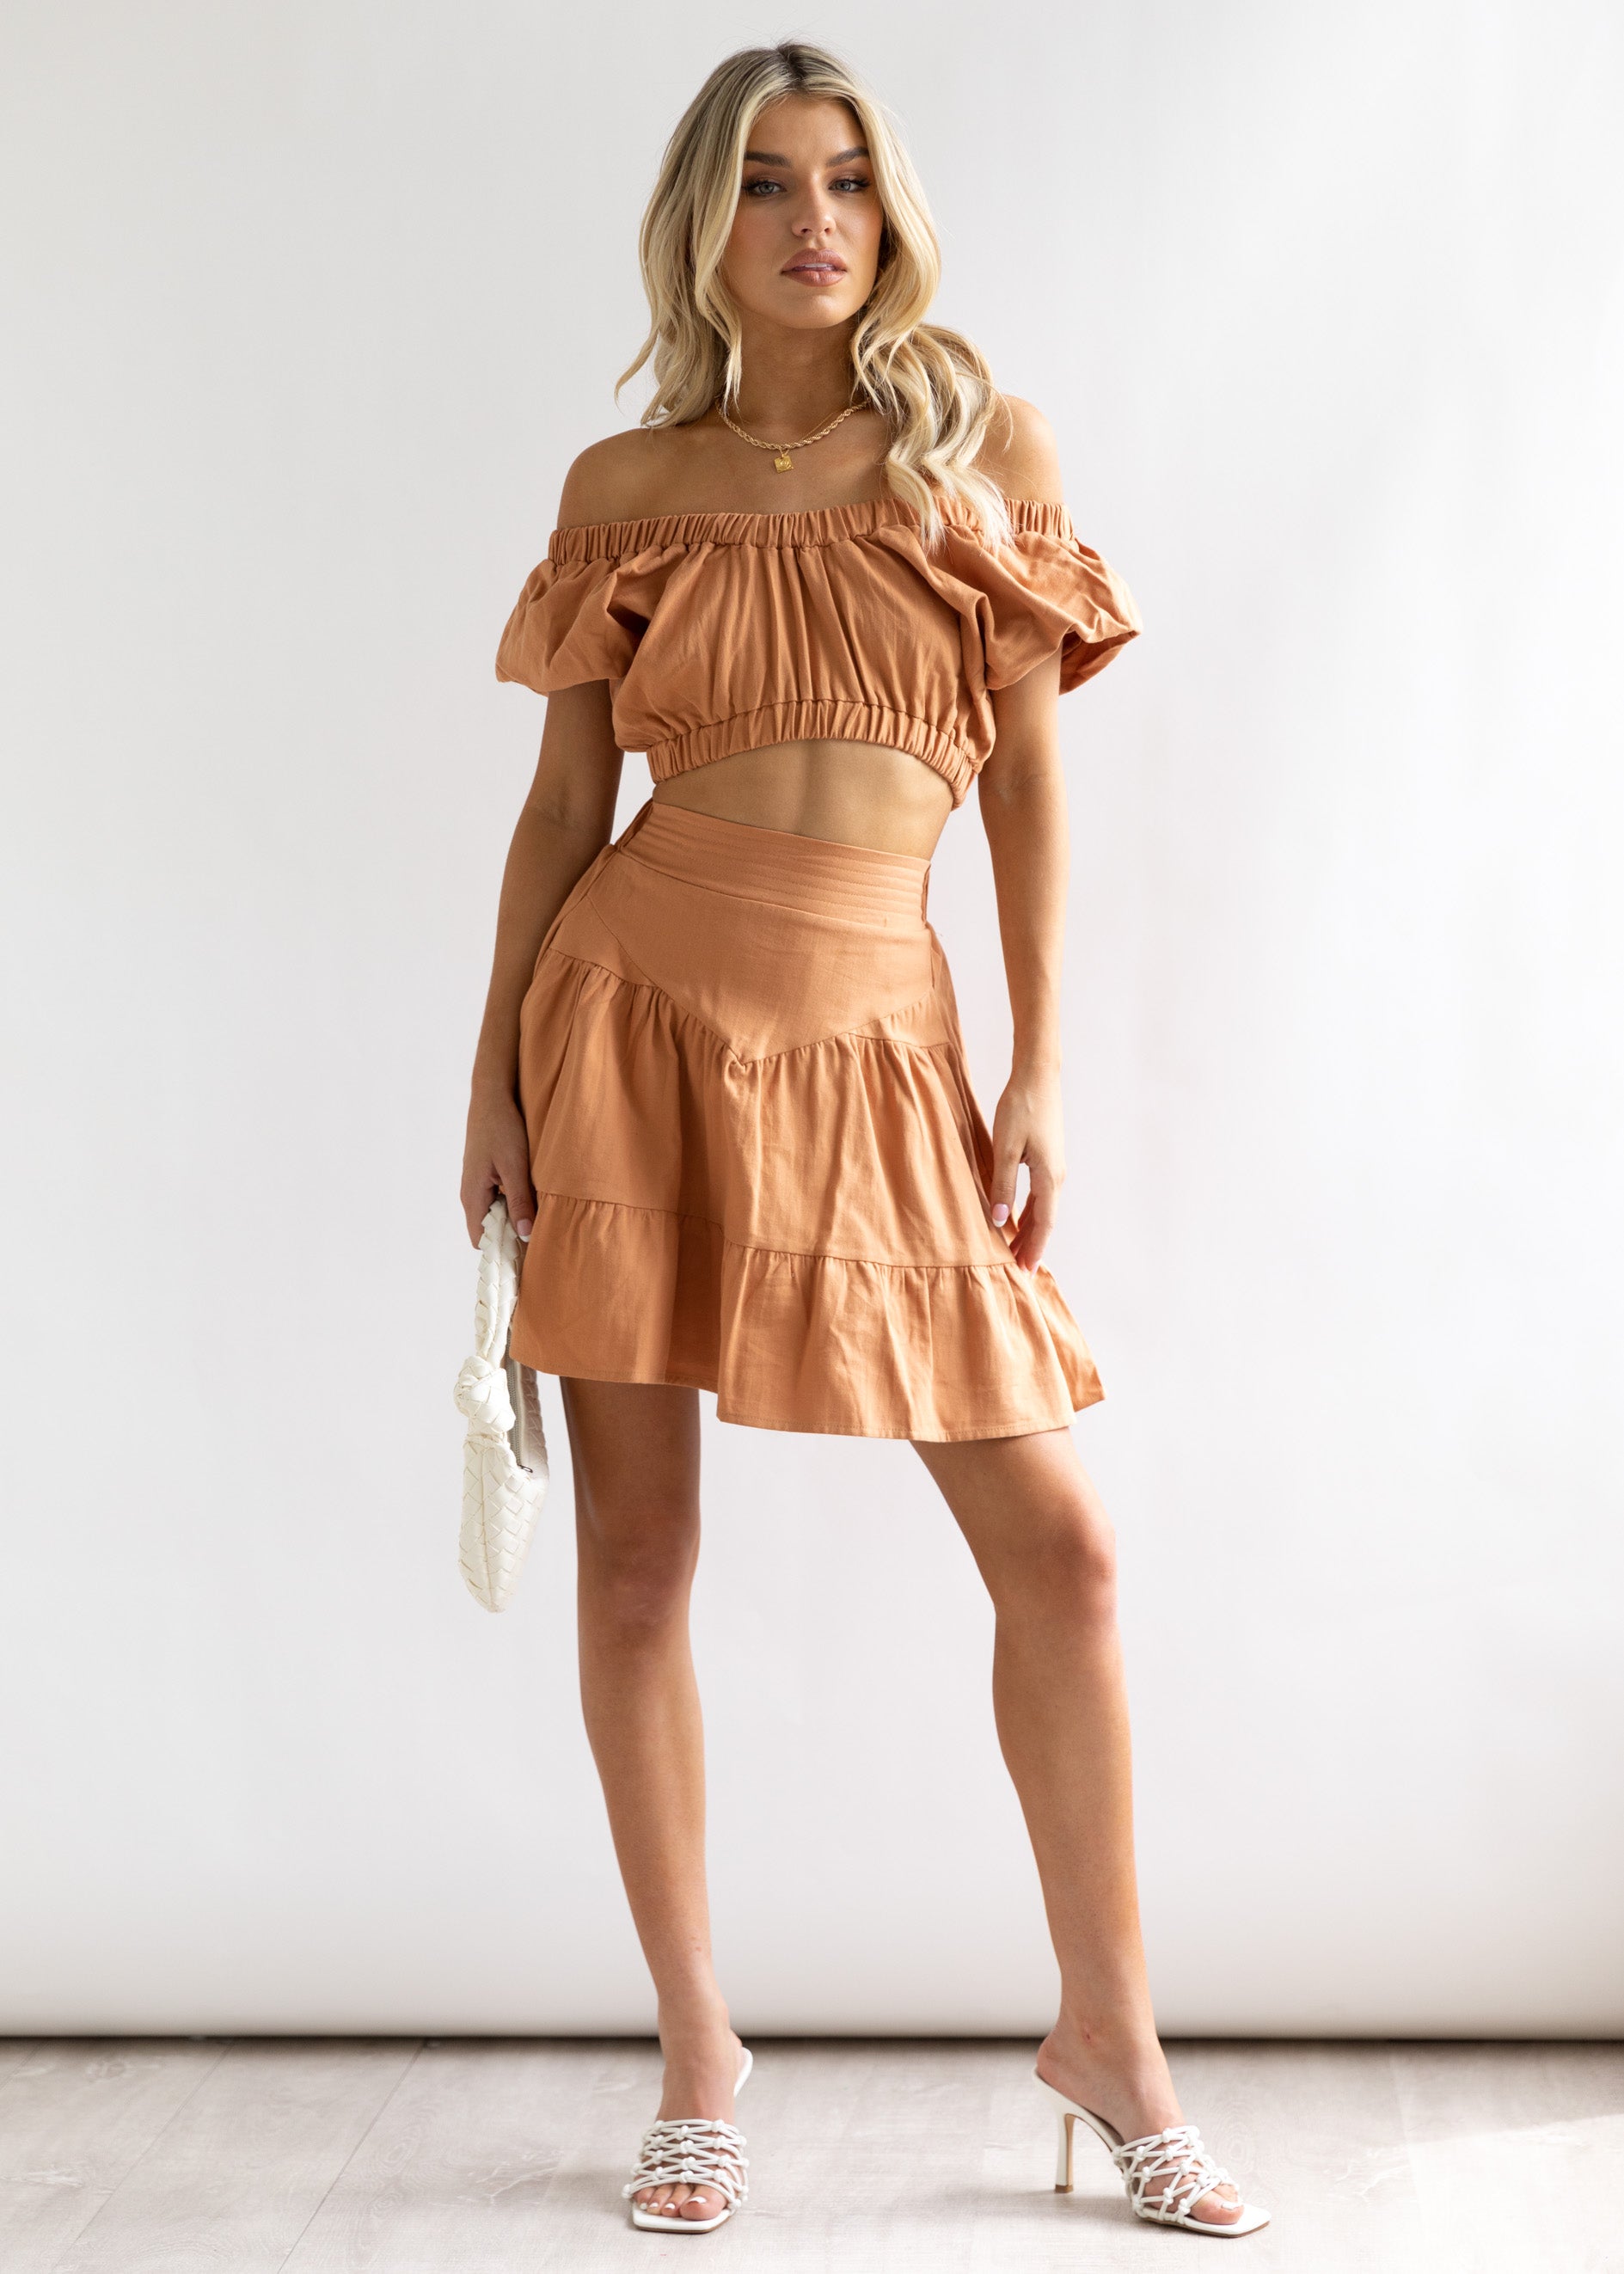 Clarice Skirt - Caramel